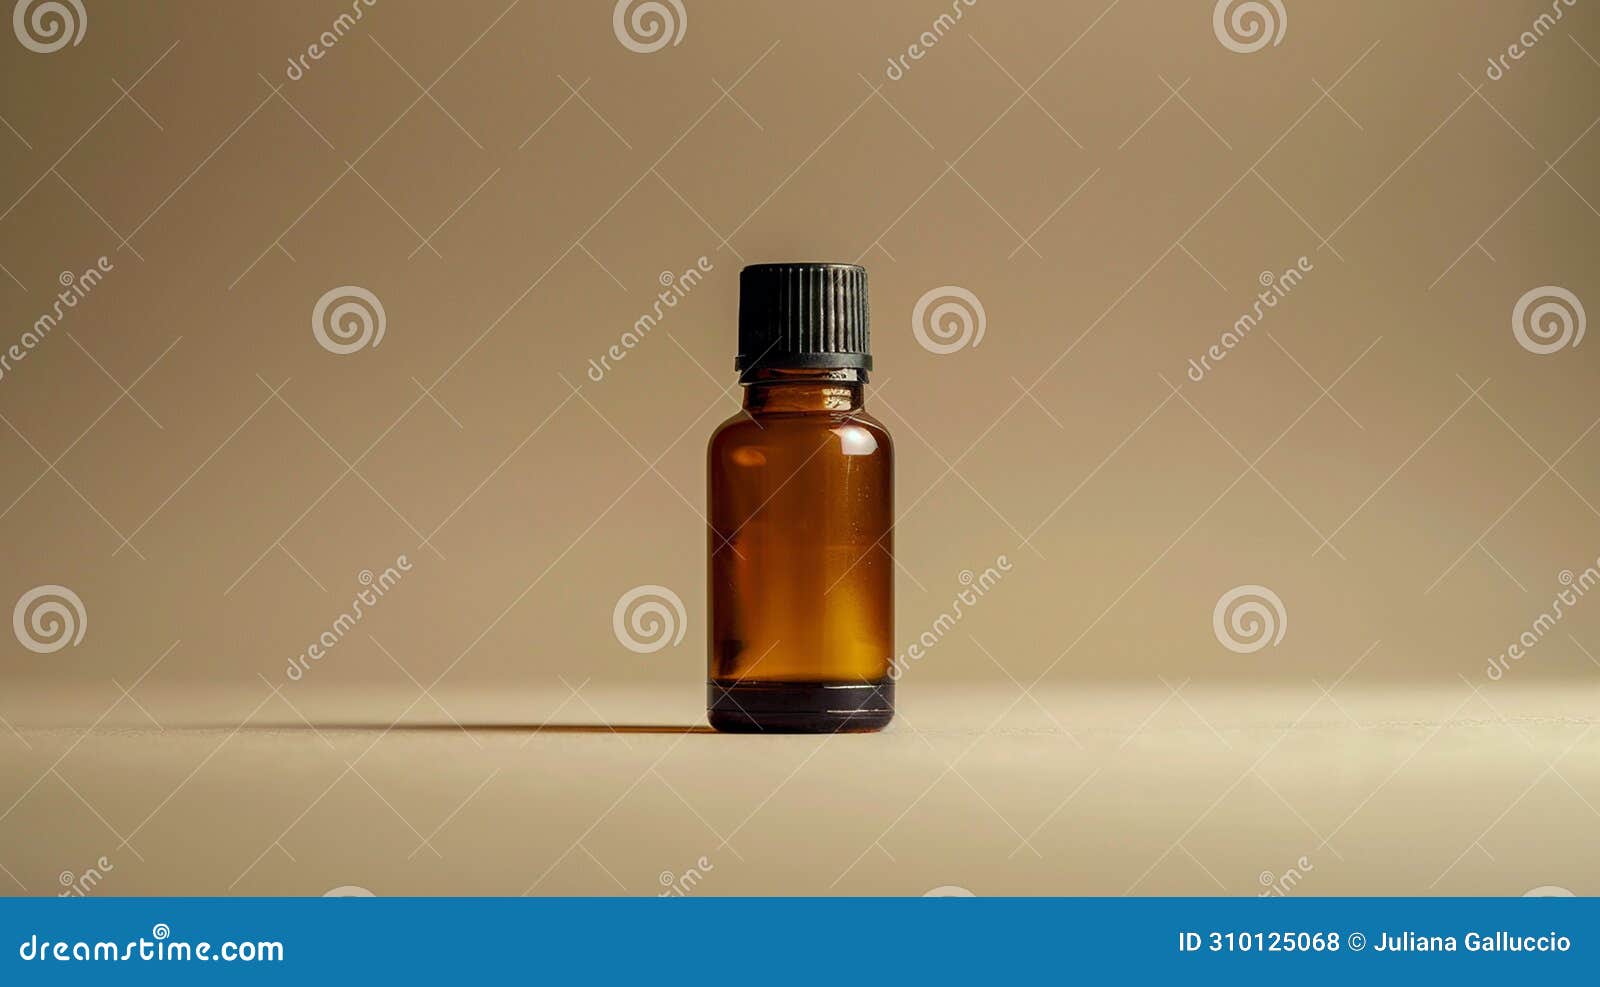 oil fragrances glass bottle mockup